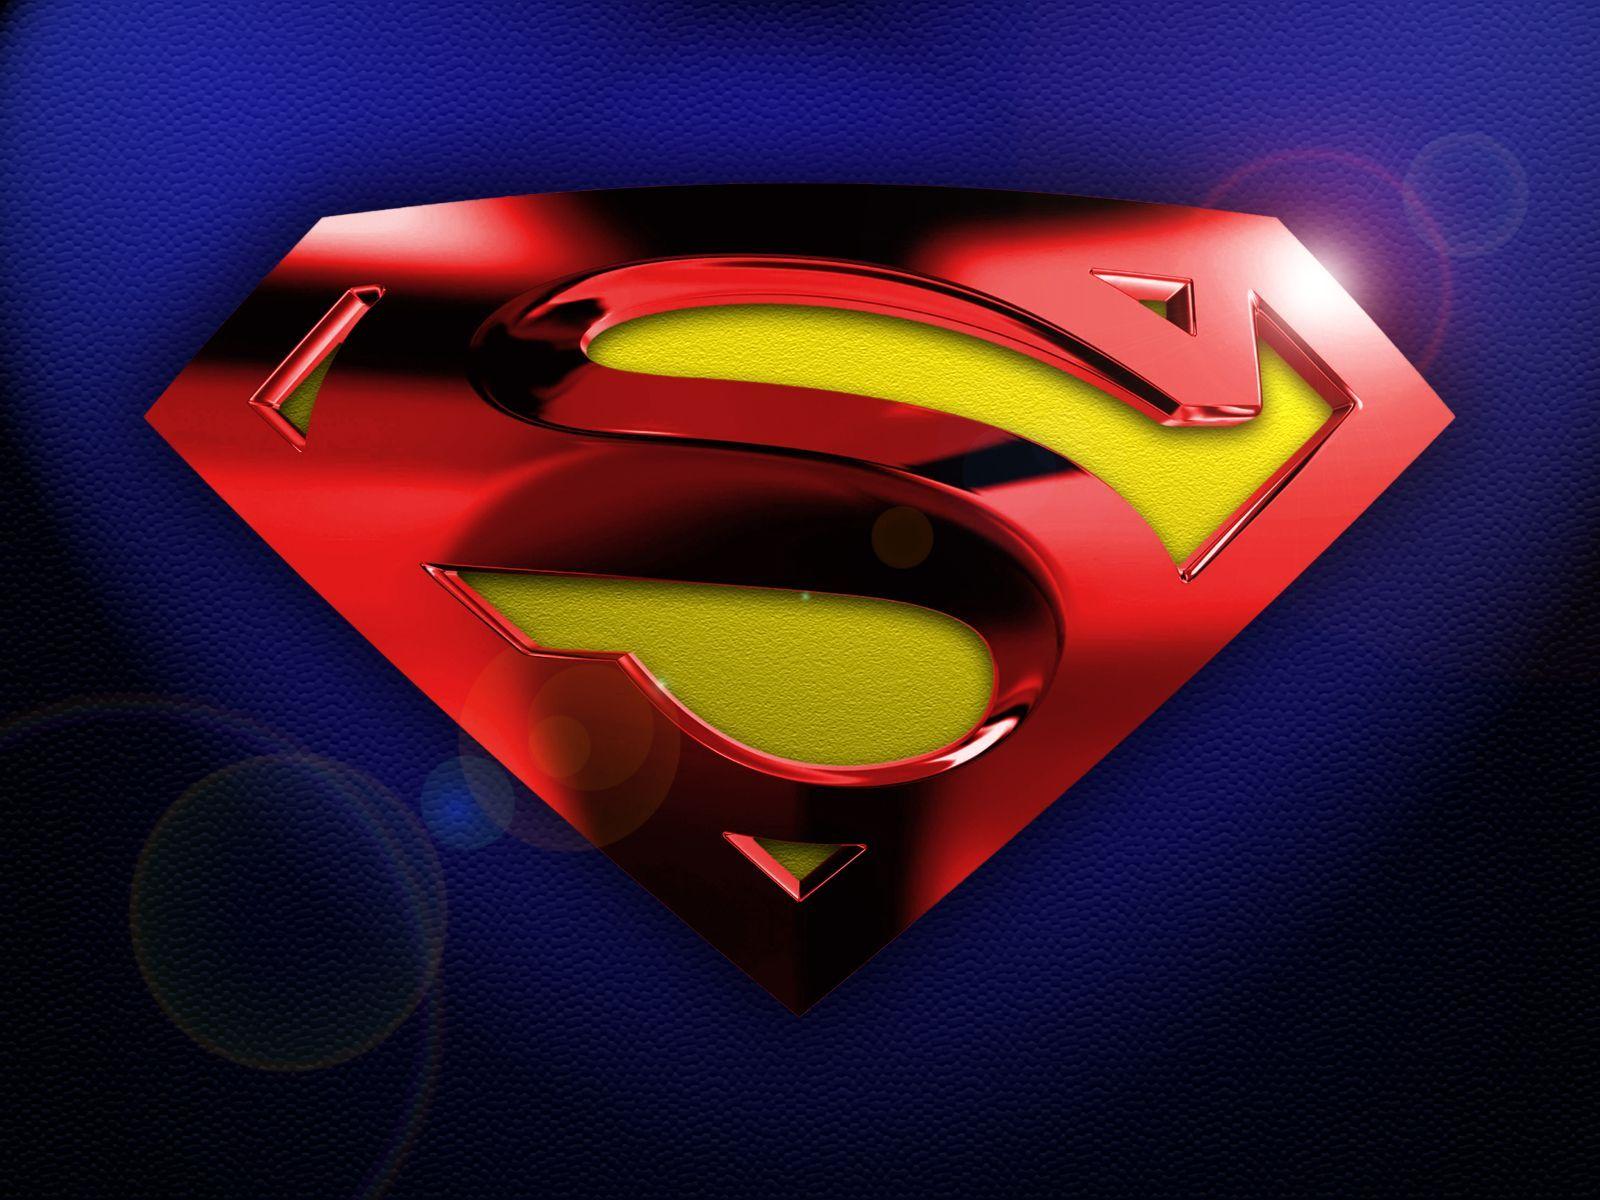 Superman Wallpaper HD